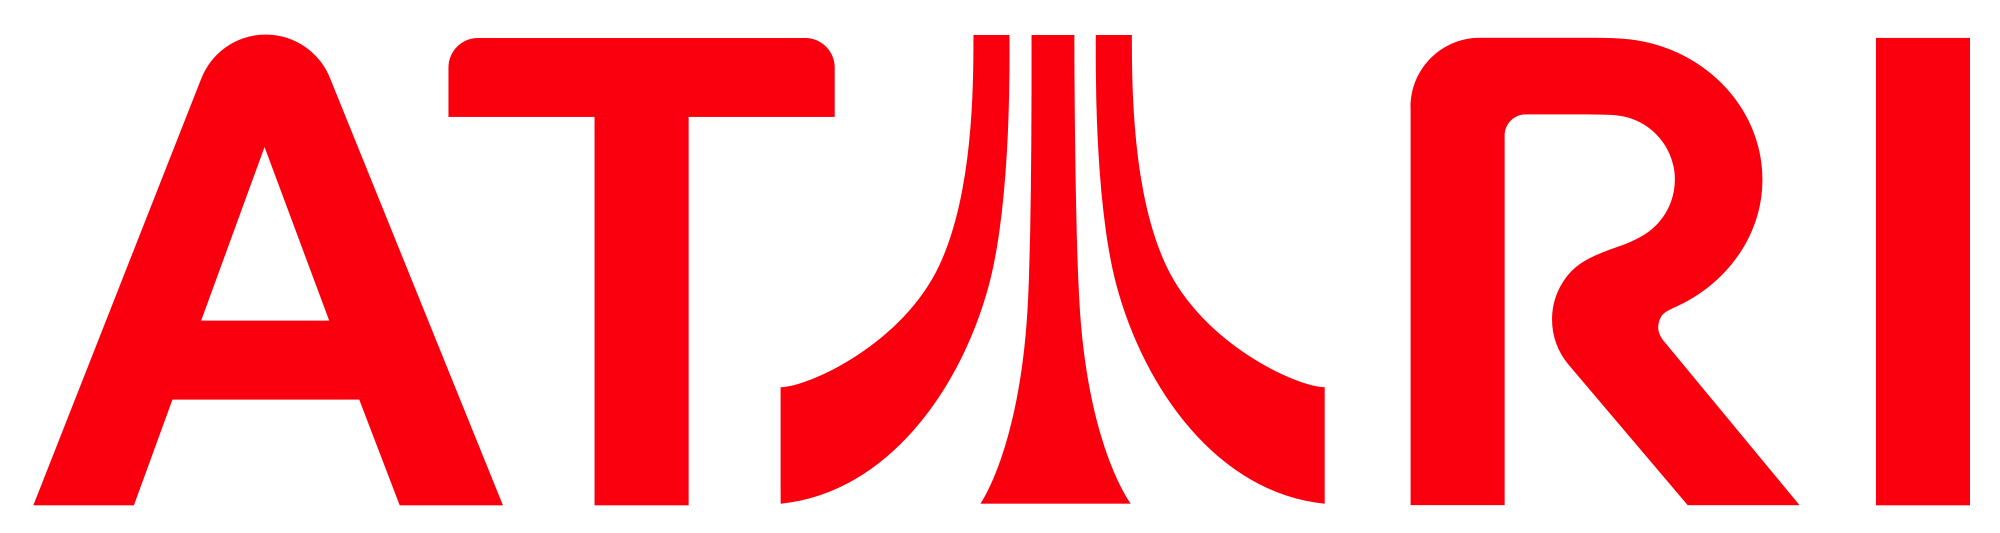 Atari Logo 06 by DHLarson Plu